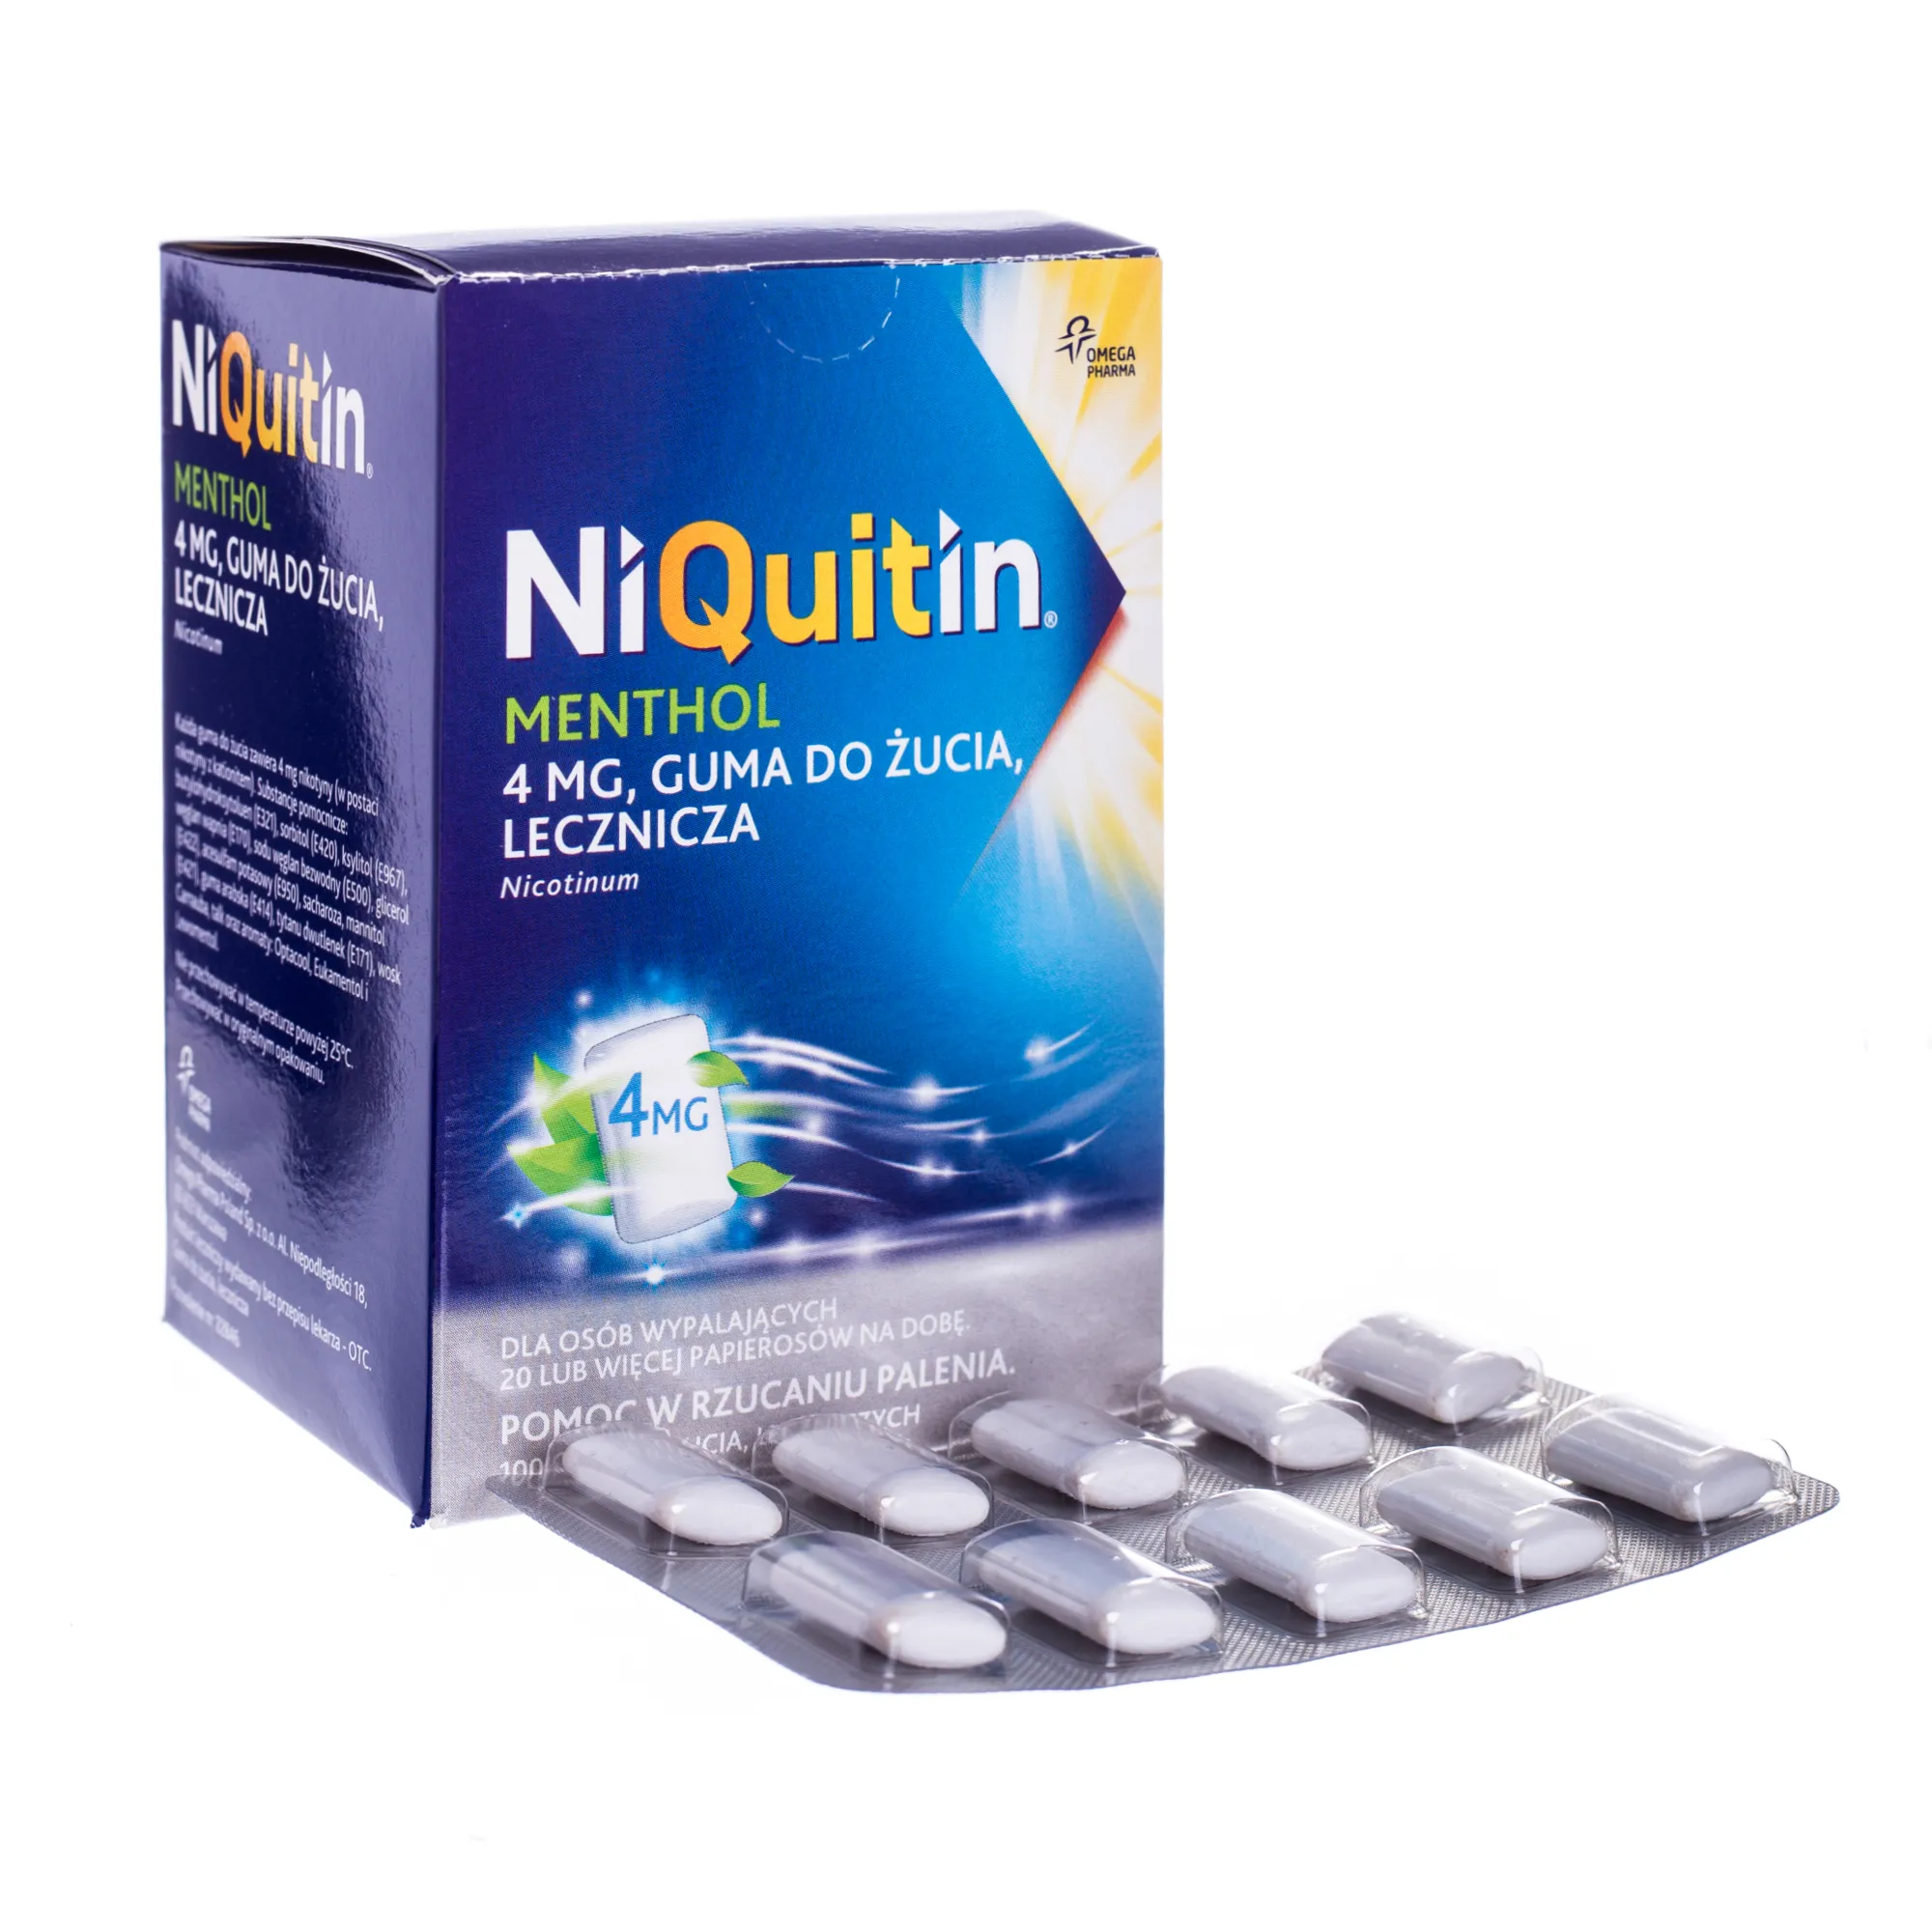 NiQuitin Menthol, 4 mg, guma do żucia, 100 sztuk